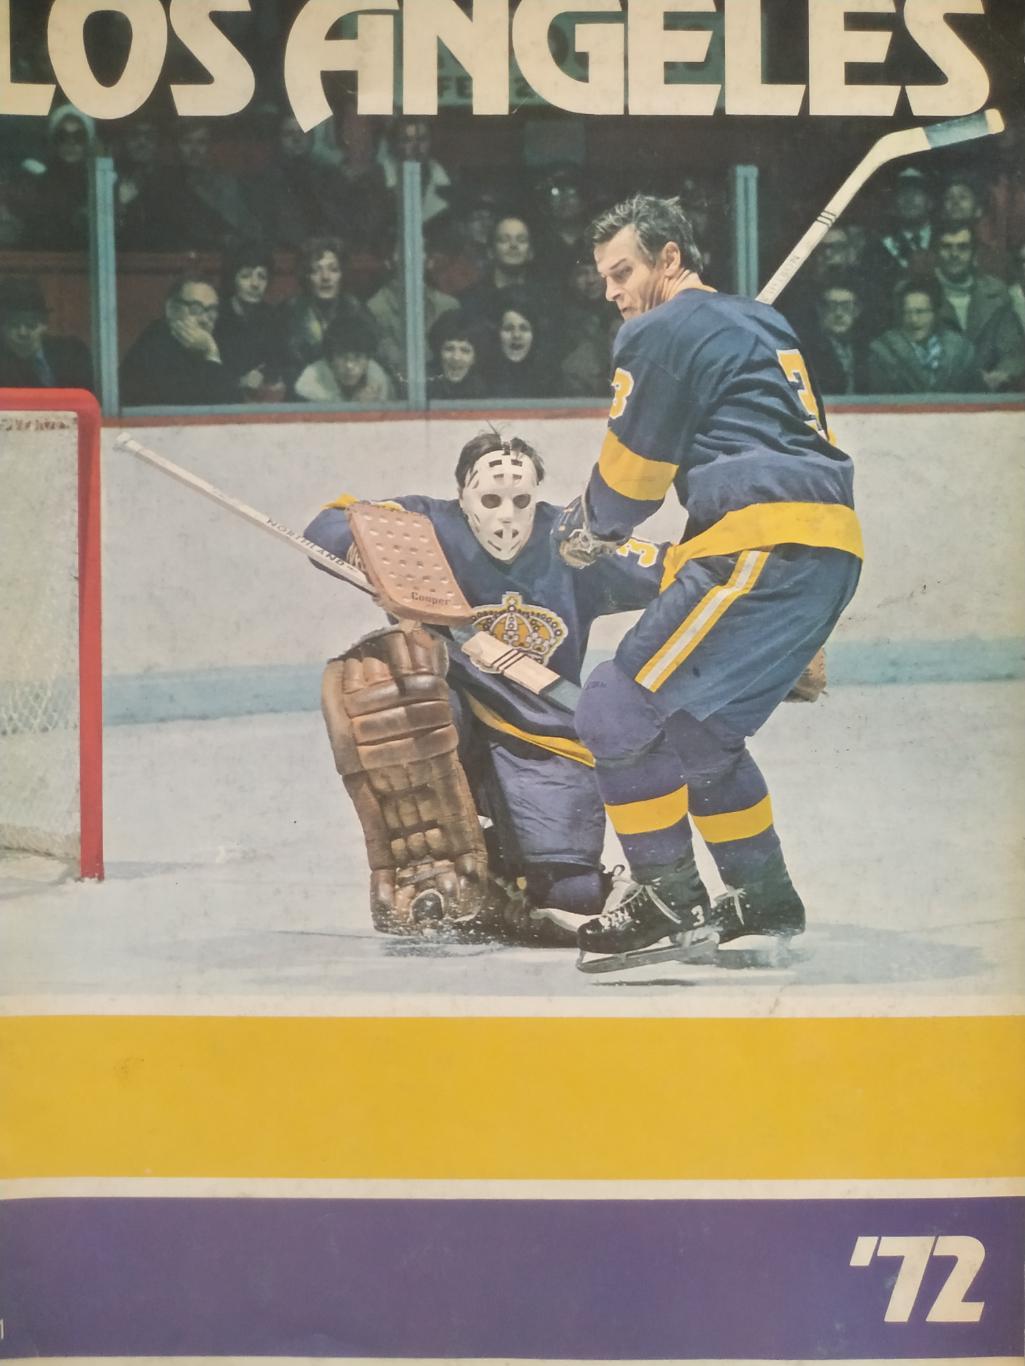 ХОККЕЙ ПРОГРАММА АЛЬБОМ ЛОС АНДЖЕЛЕС НХЛ NHL 1971 DEC.01 LOS ANGELES PROGRAM